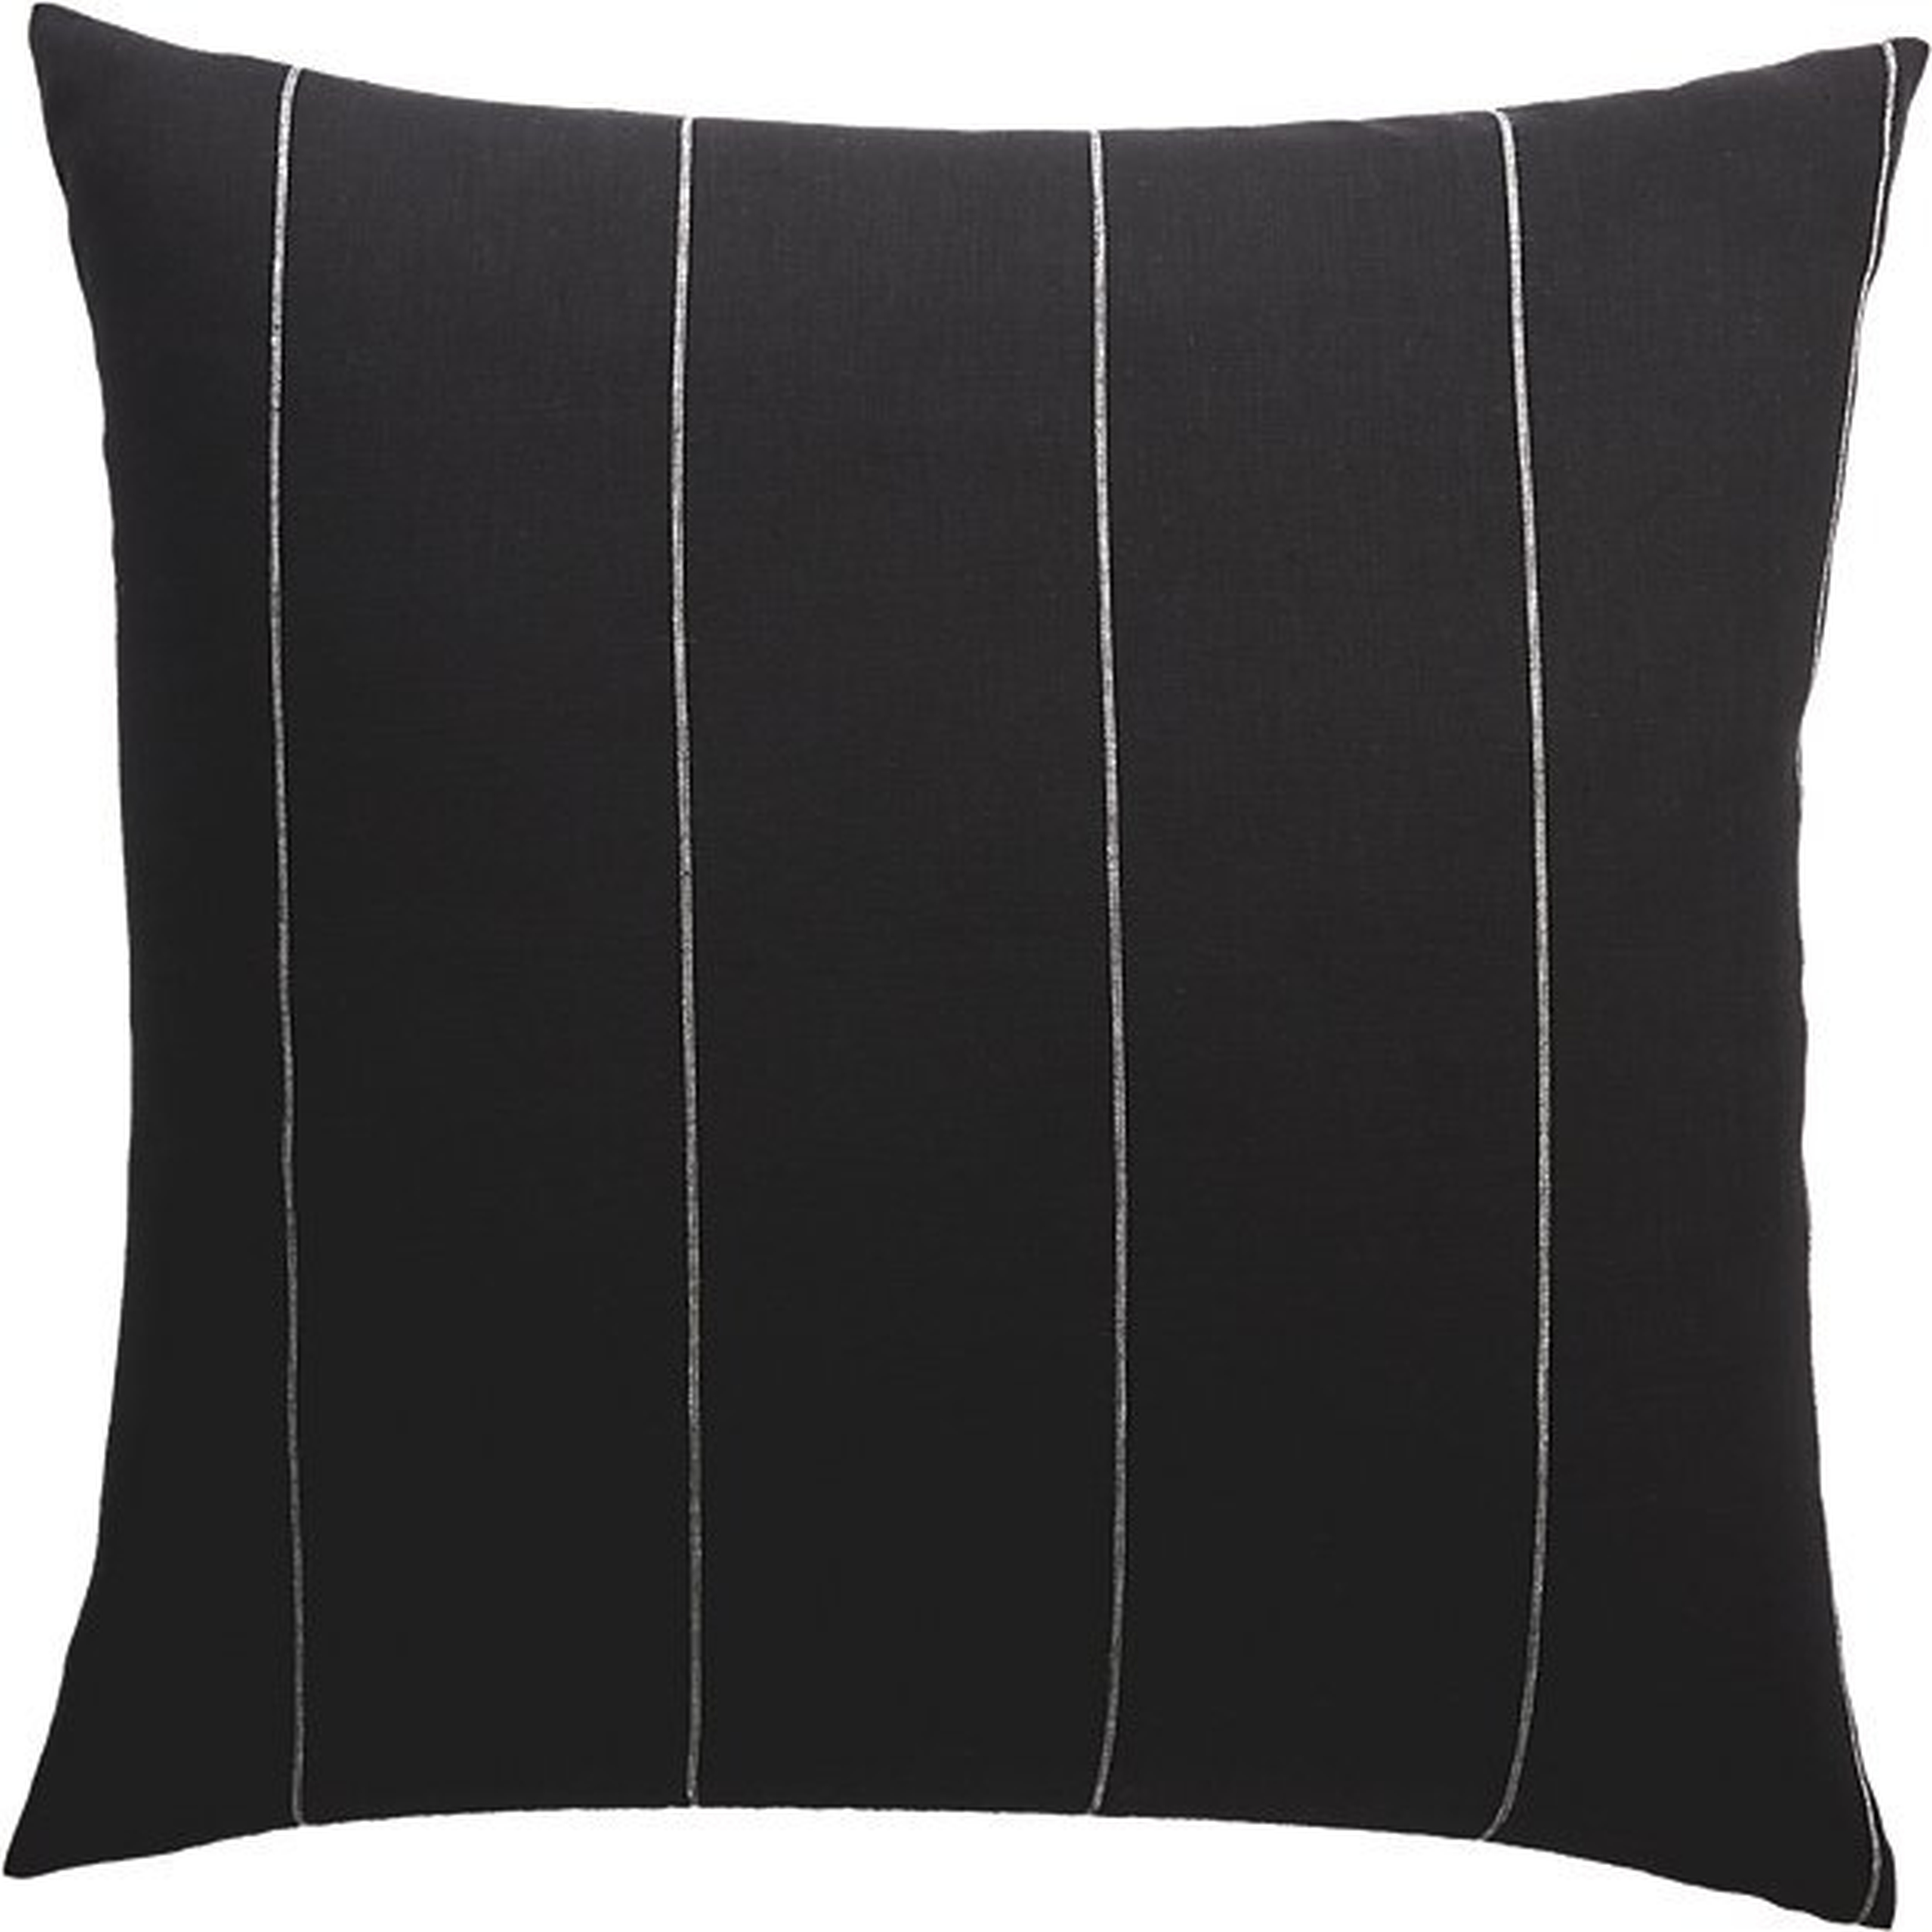 Pinstripe Linen Pillow, Black, 20" x 20" - CB2